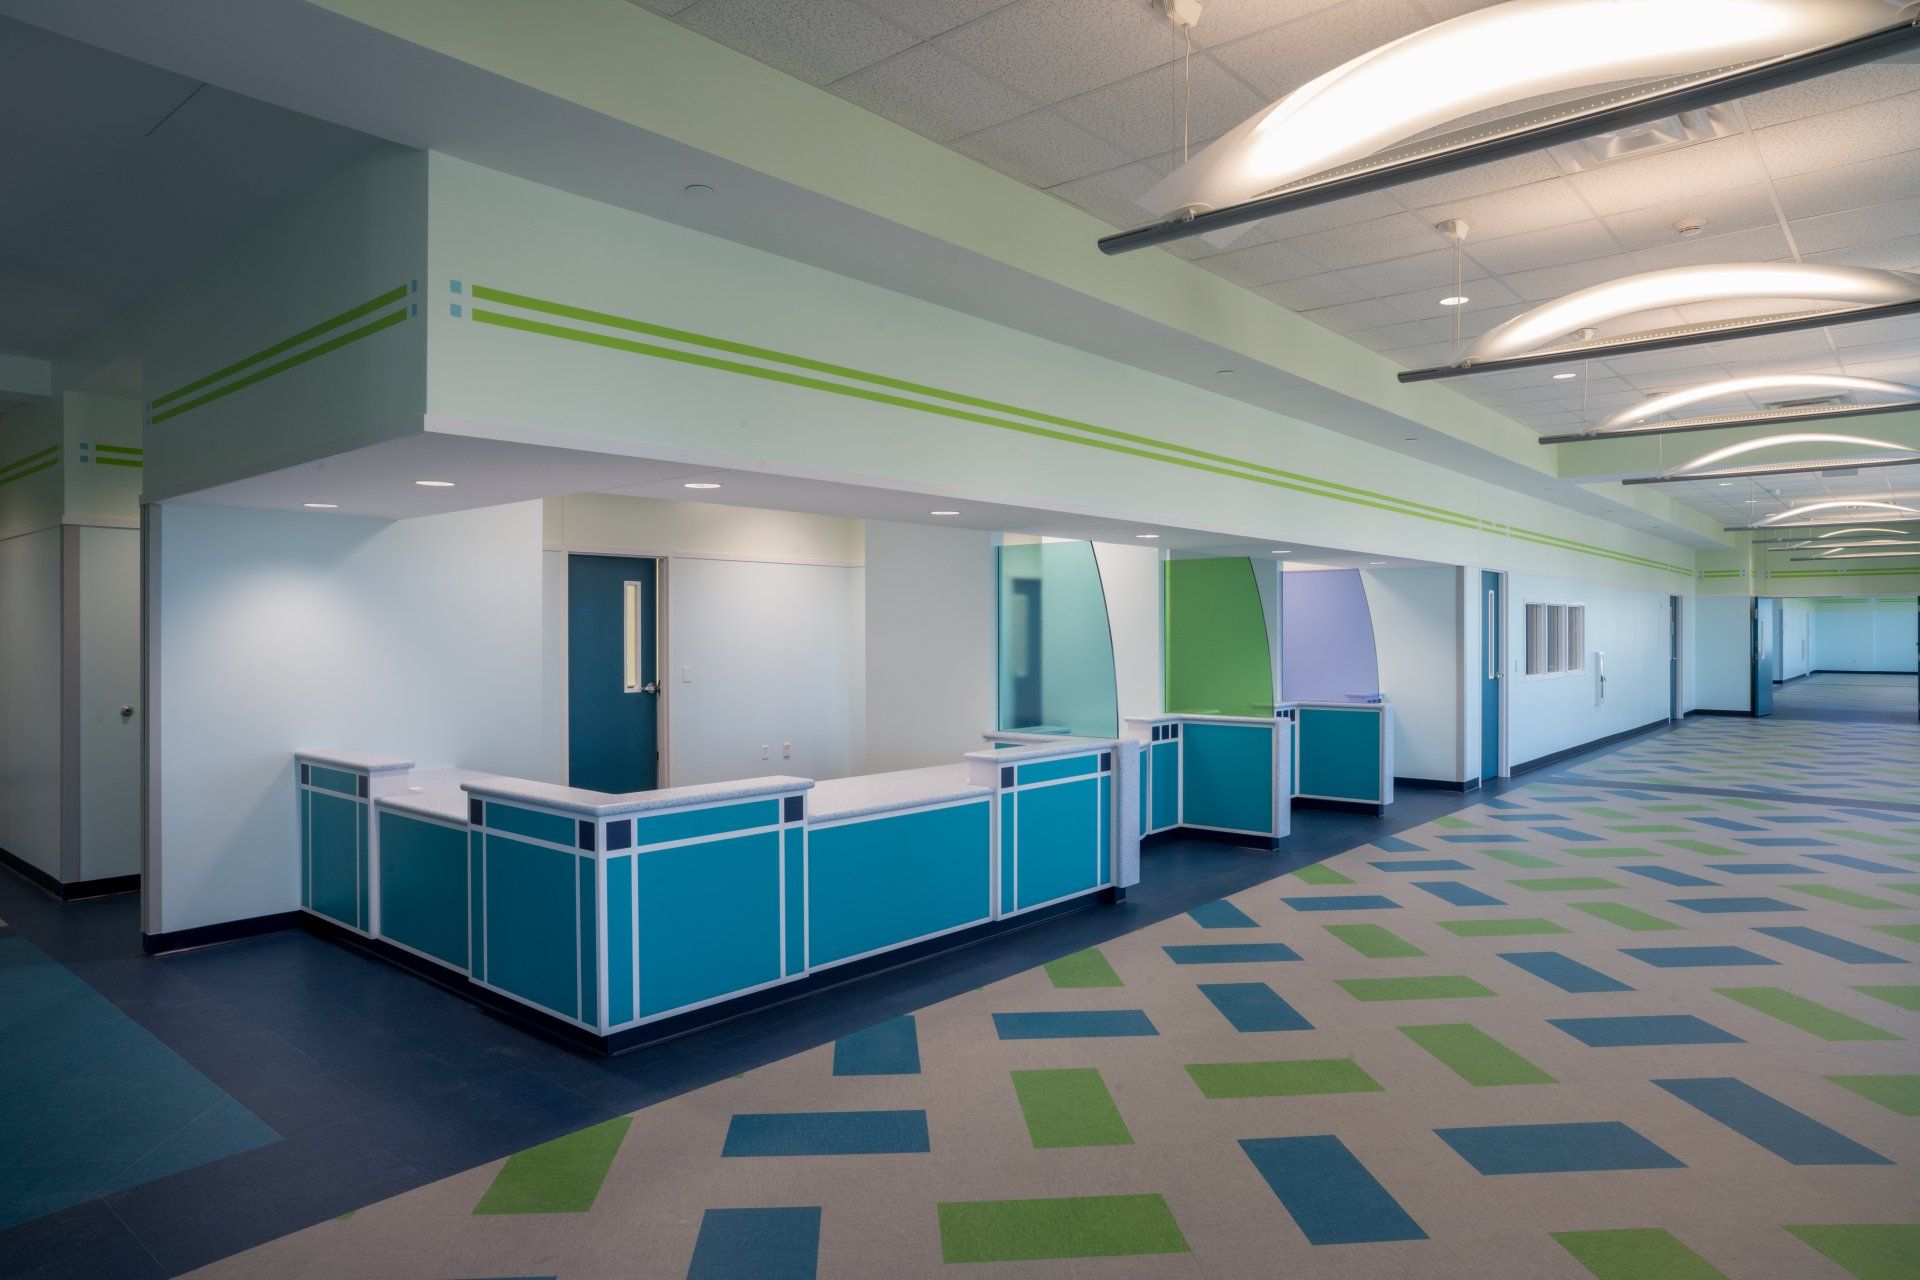 Hospital corridor with hot desks